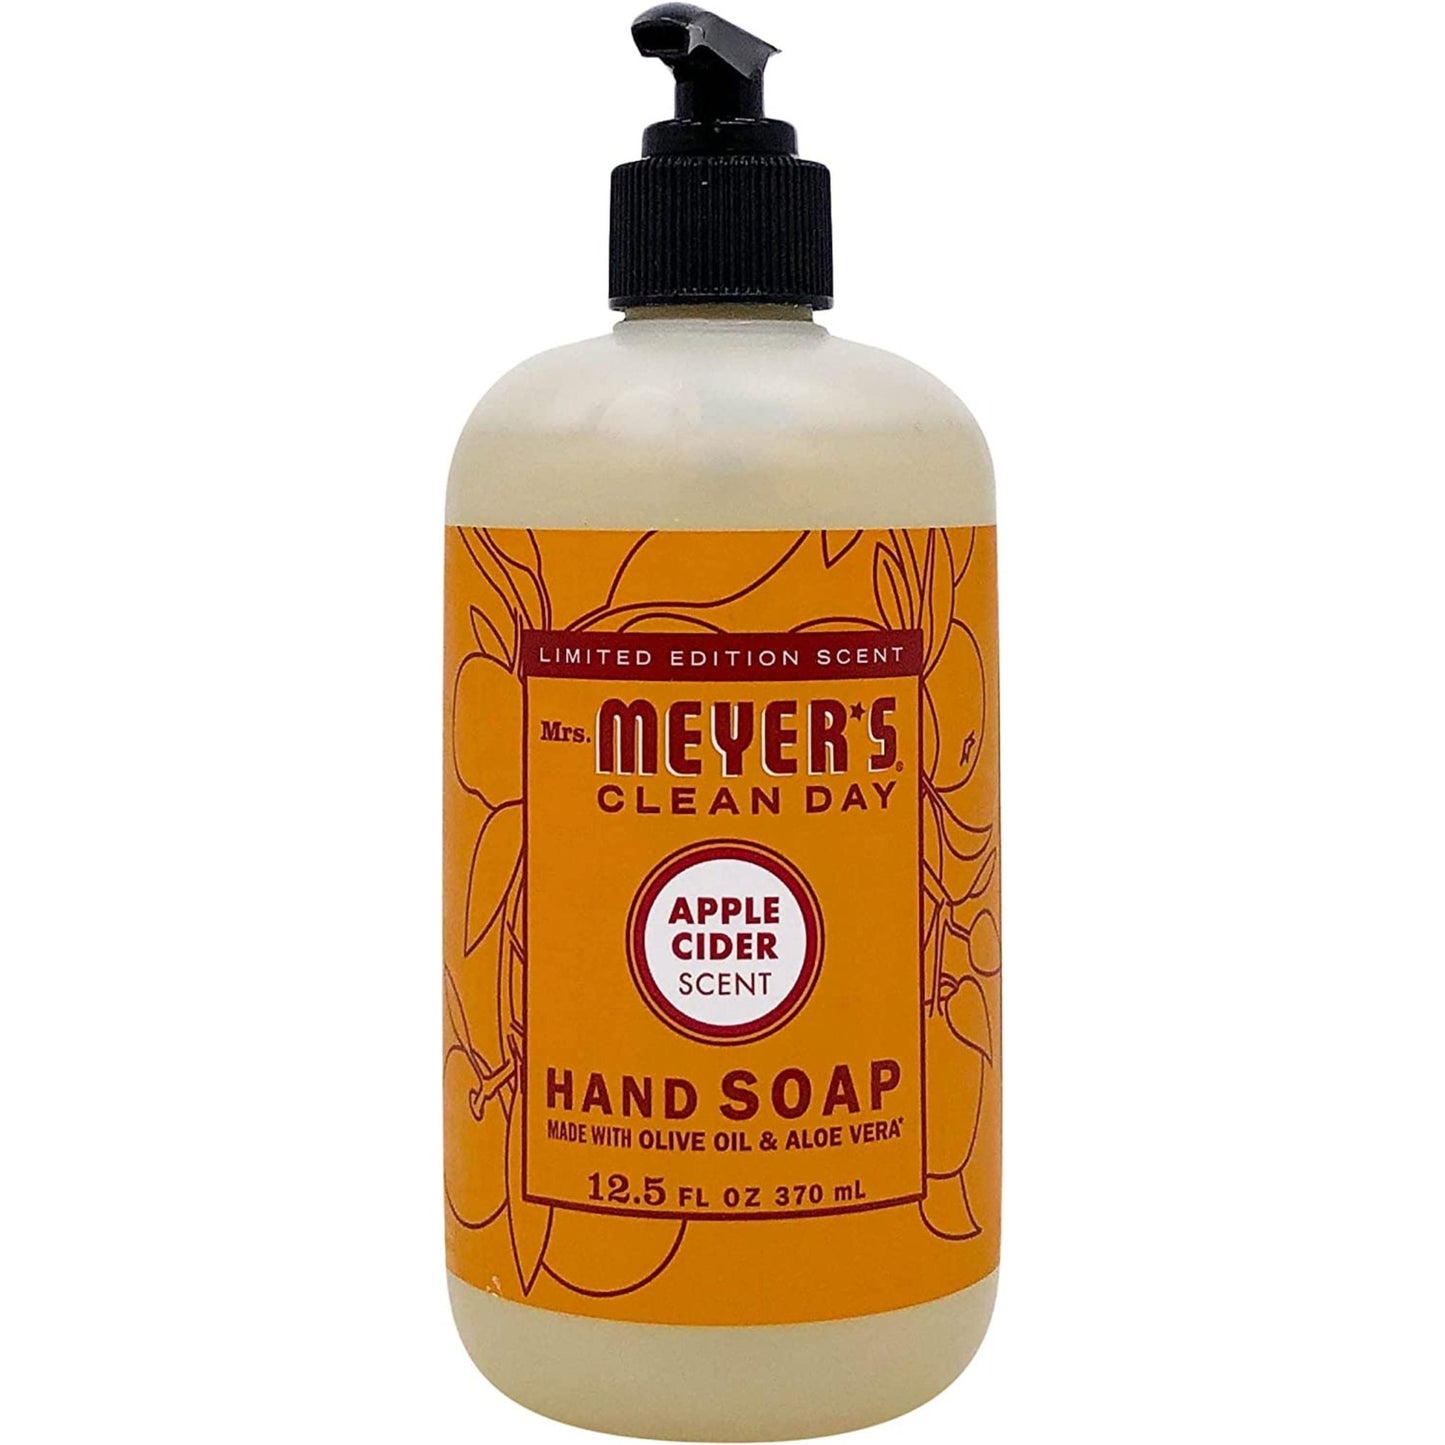 Mrs. Meyer's Clean Day Liquid Hand Soap, Apple Cider, 12.5 Fluid Ounce